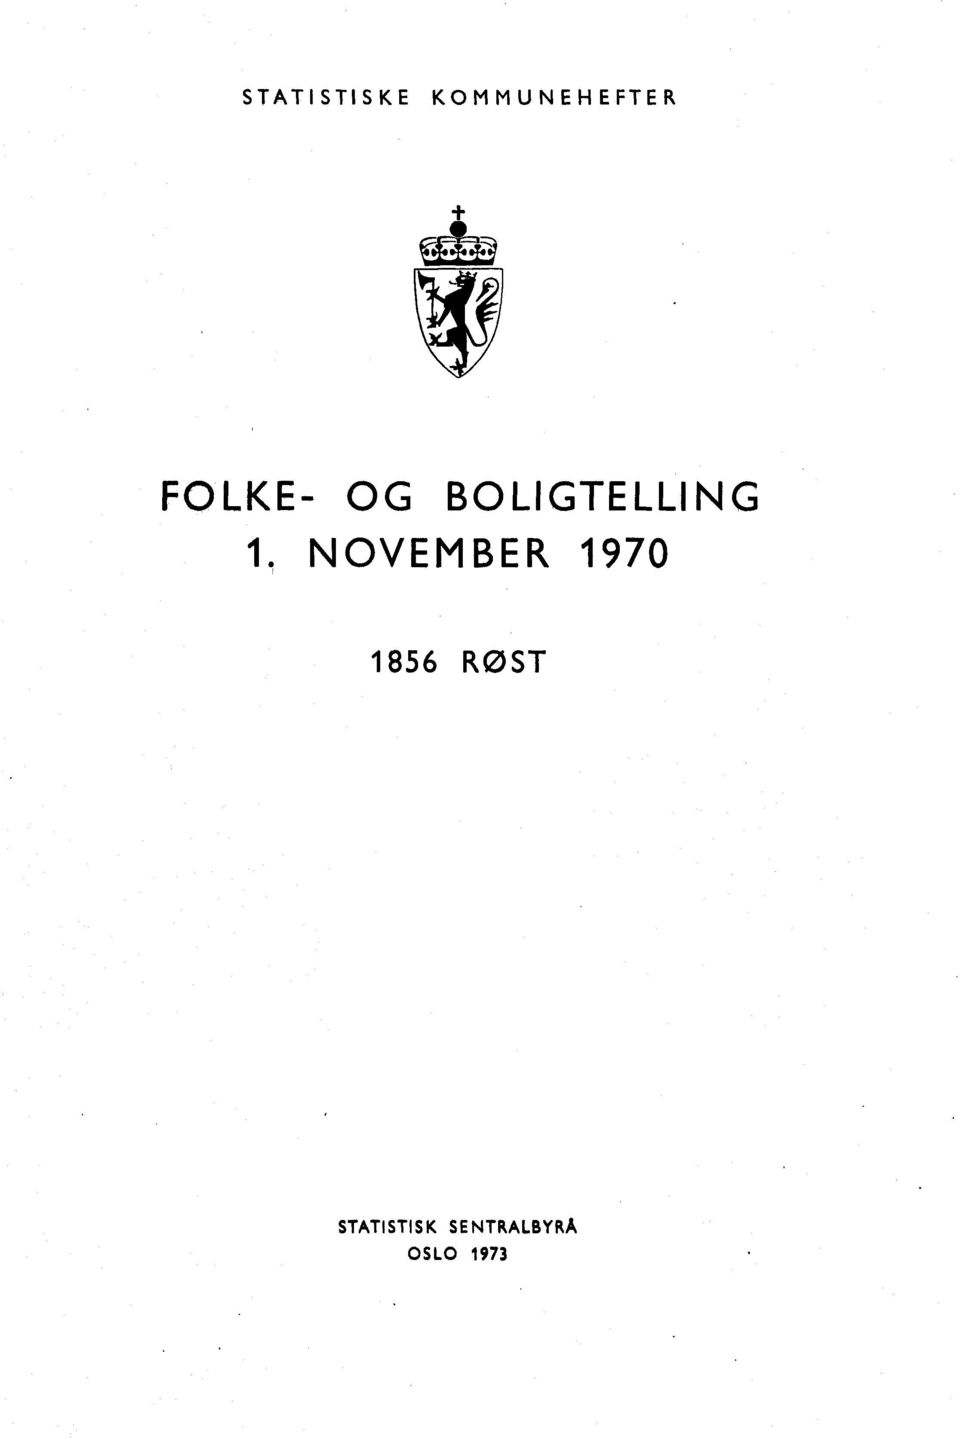 NOVEMBER 1970 1856 RØST